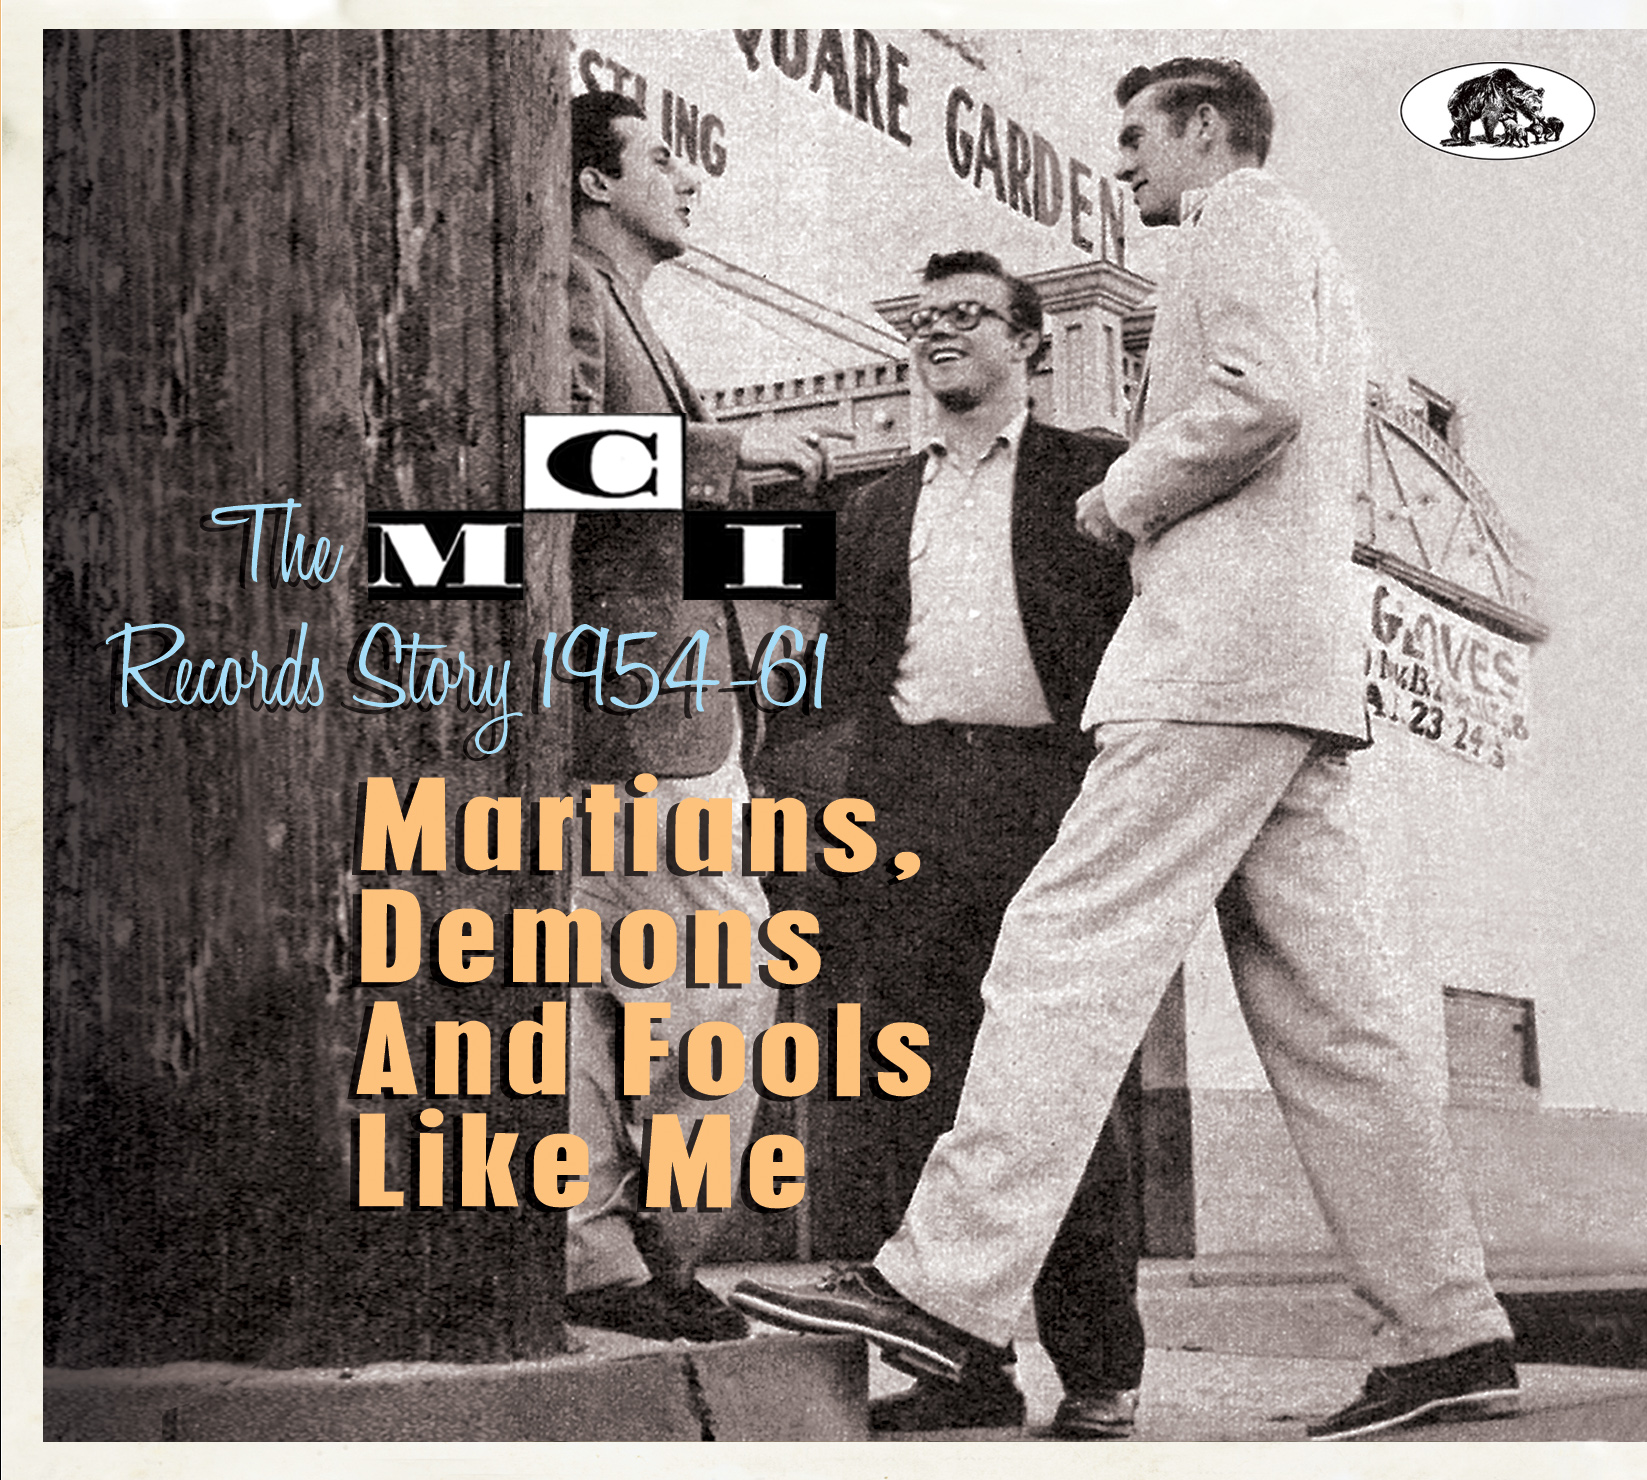 V.A. - The MCI Records Story 1954-61 : Martians ,Demons...